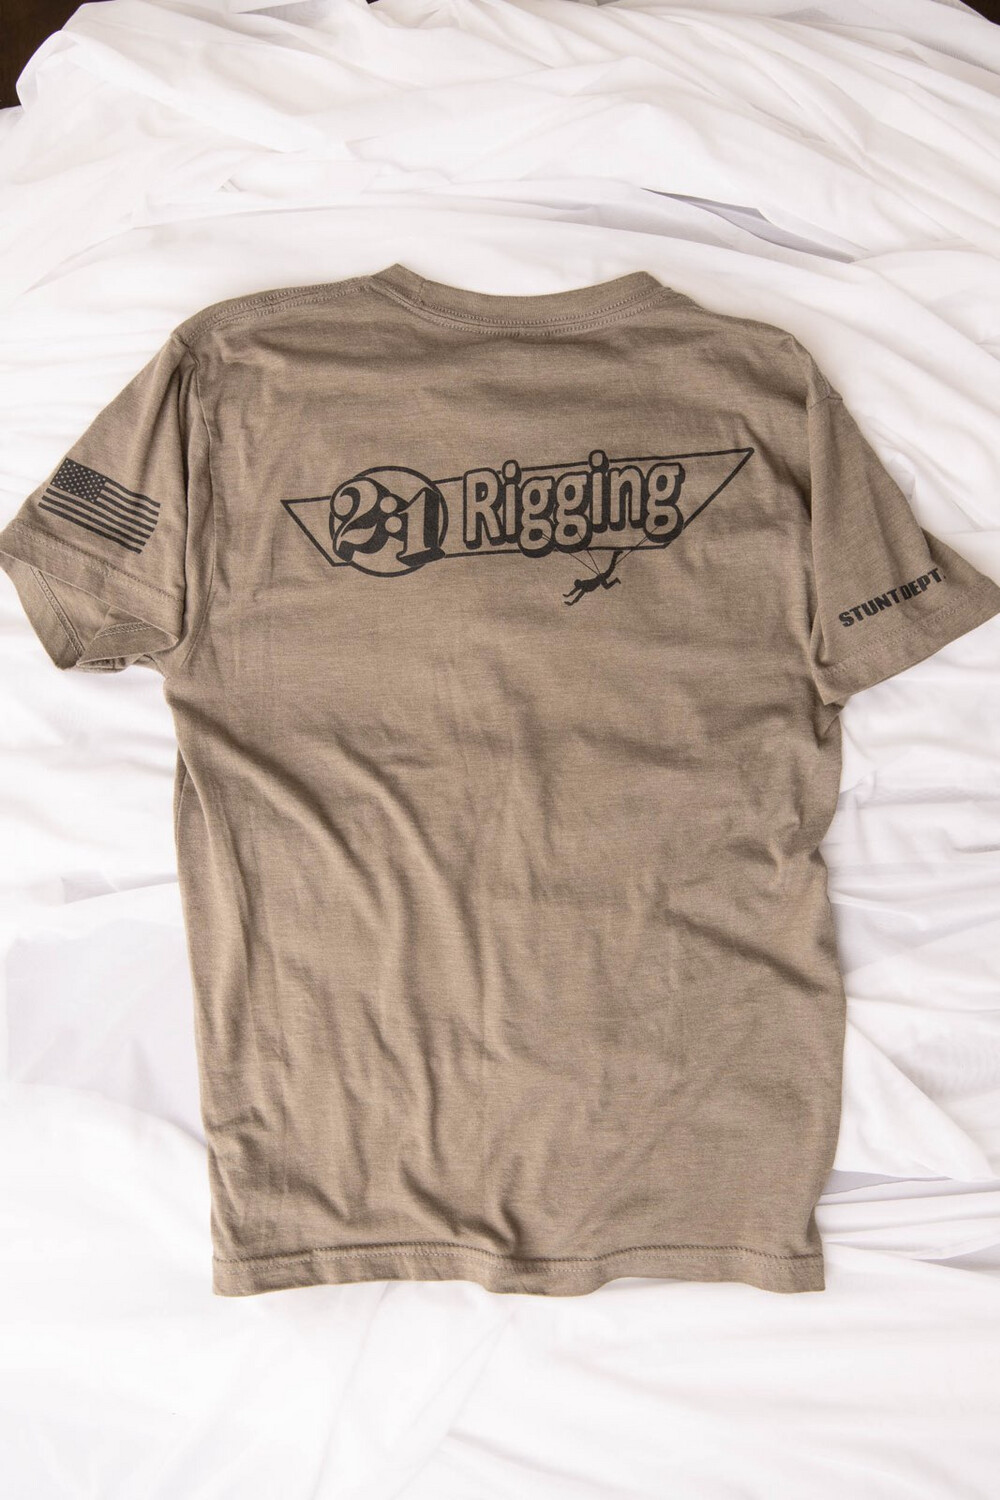 2:1 Rigging T - Shirt